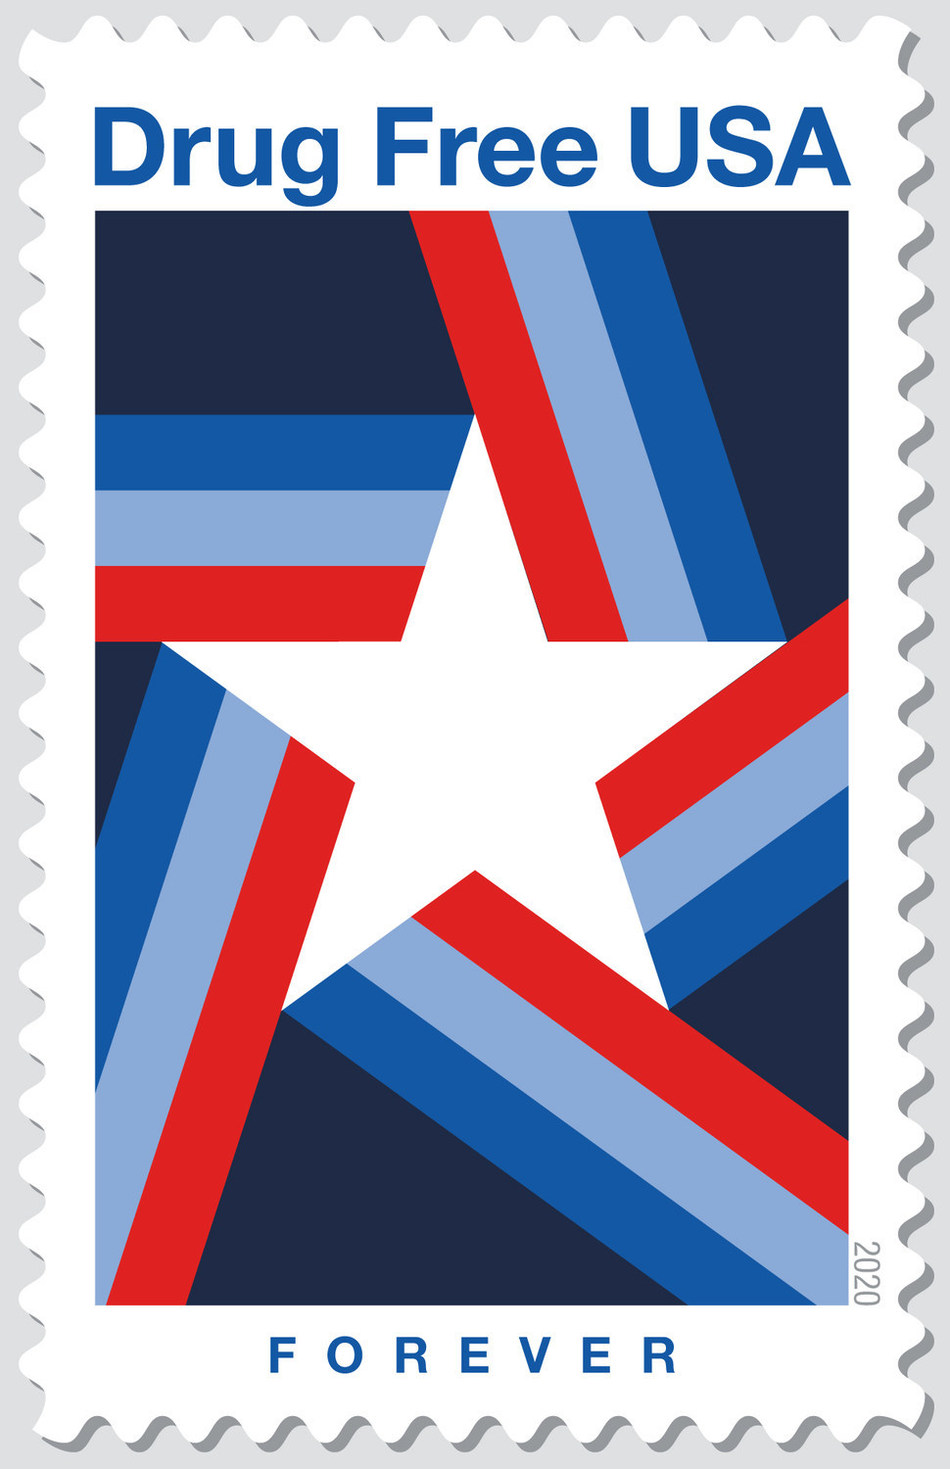 U.S. Postal Service Reveals New Drug Free USA Forever Stamp